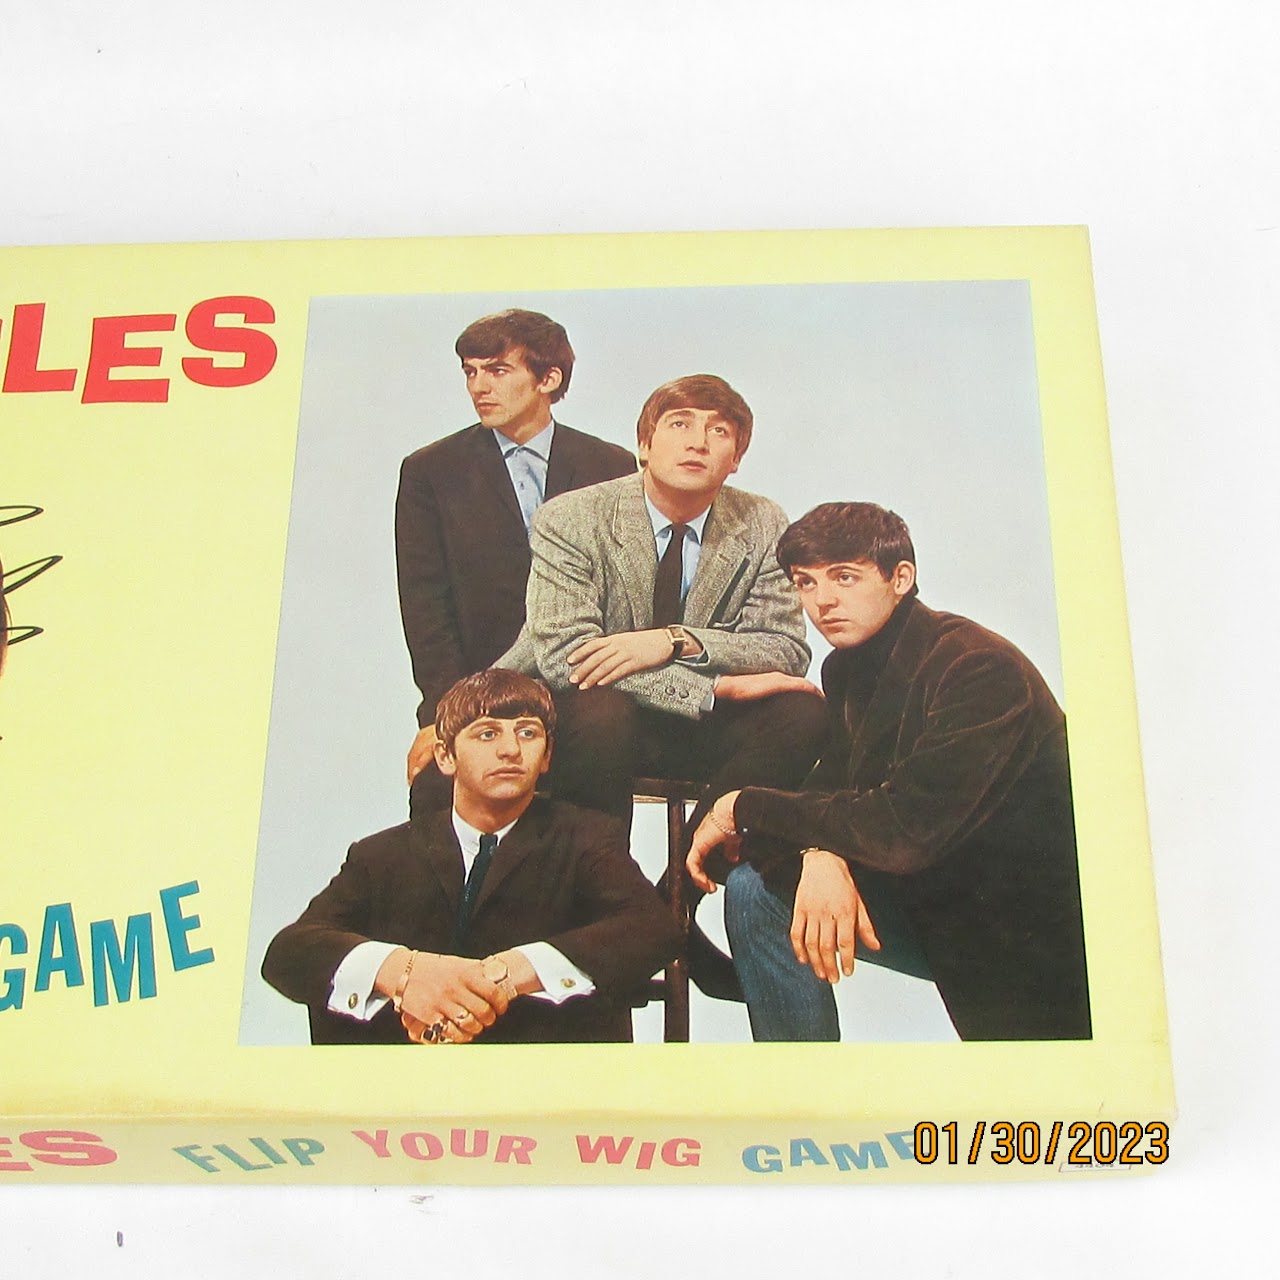 The Beatles 'Flip Your Wig' Vintage Board Game